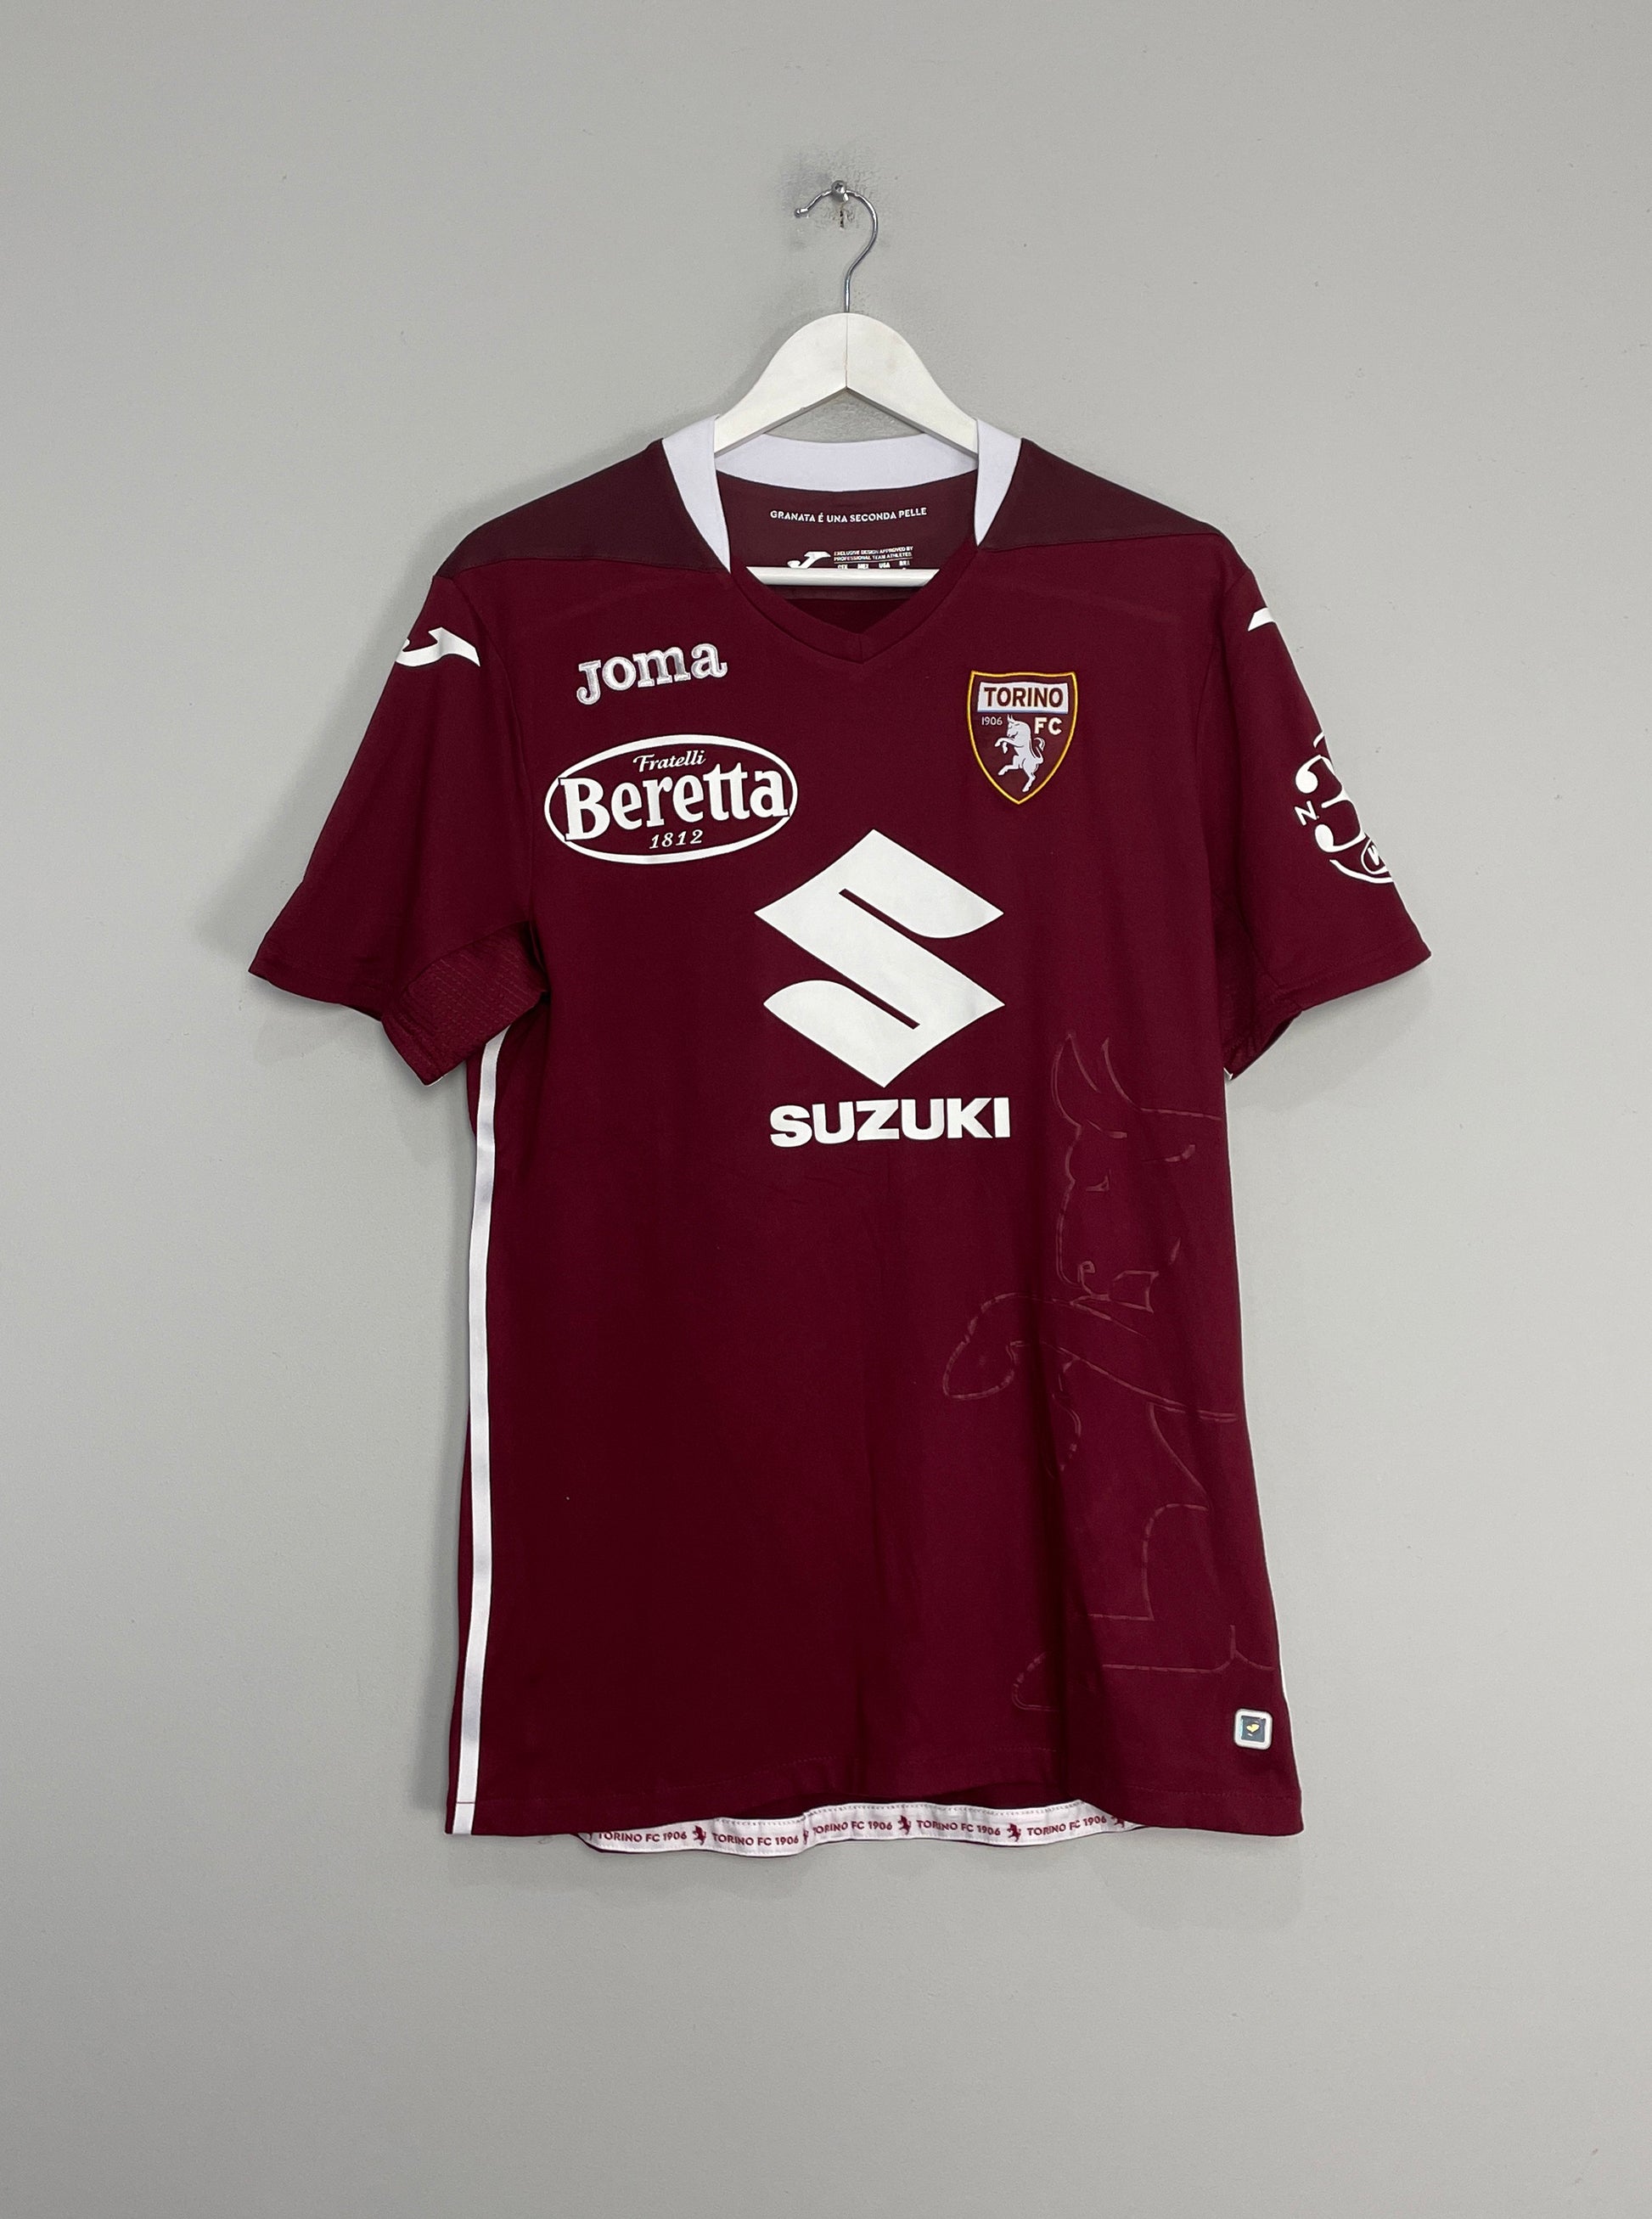 Torino  the New kits